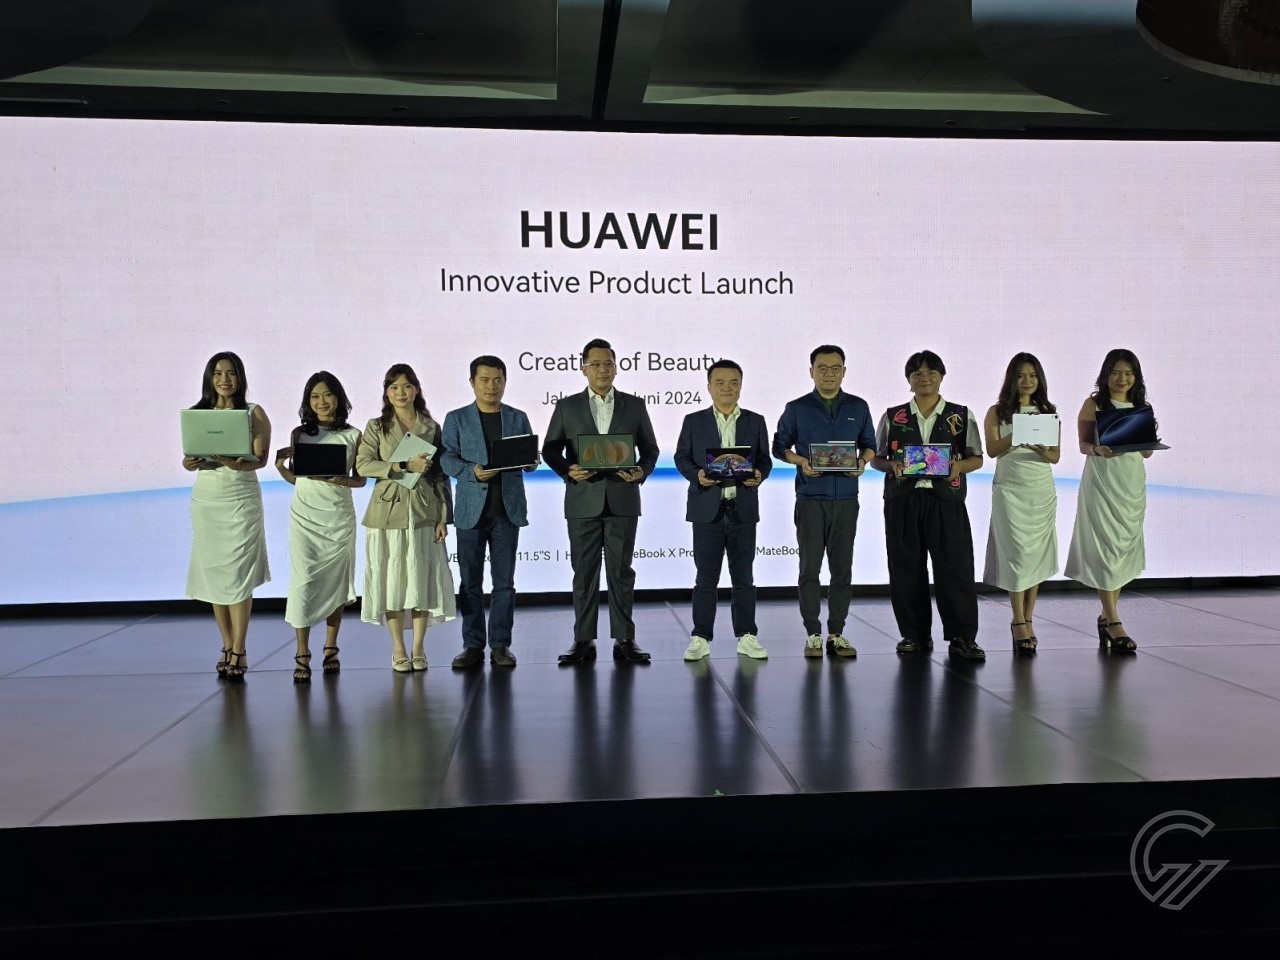 HUAWEI-MateBook-dan-MatePad-launch-1